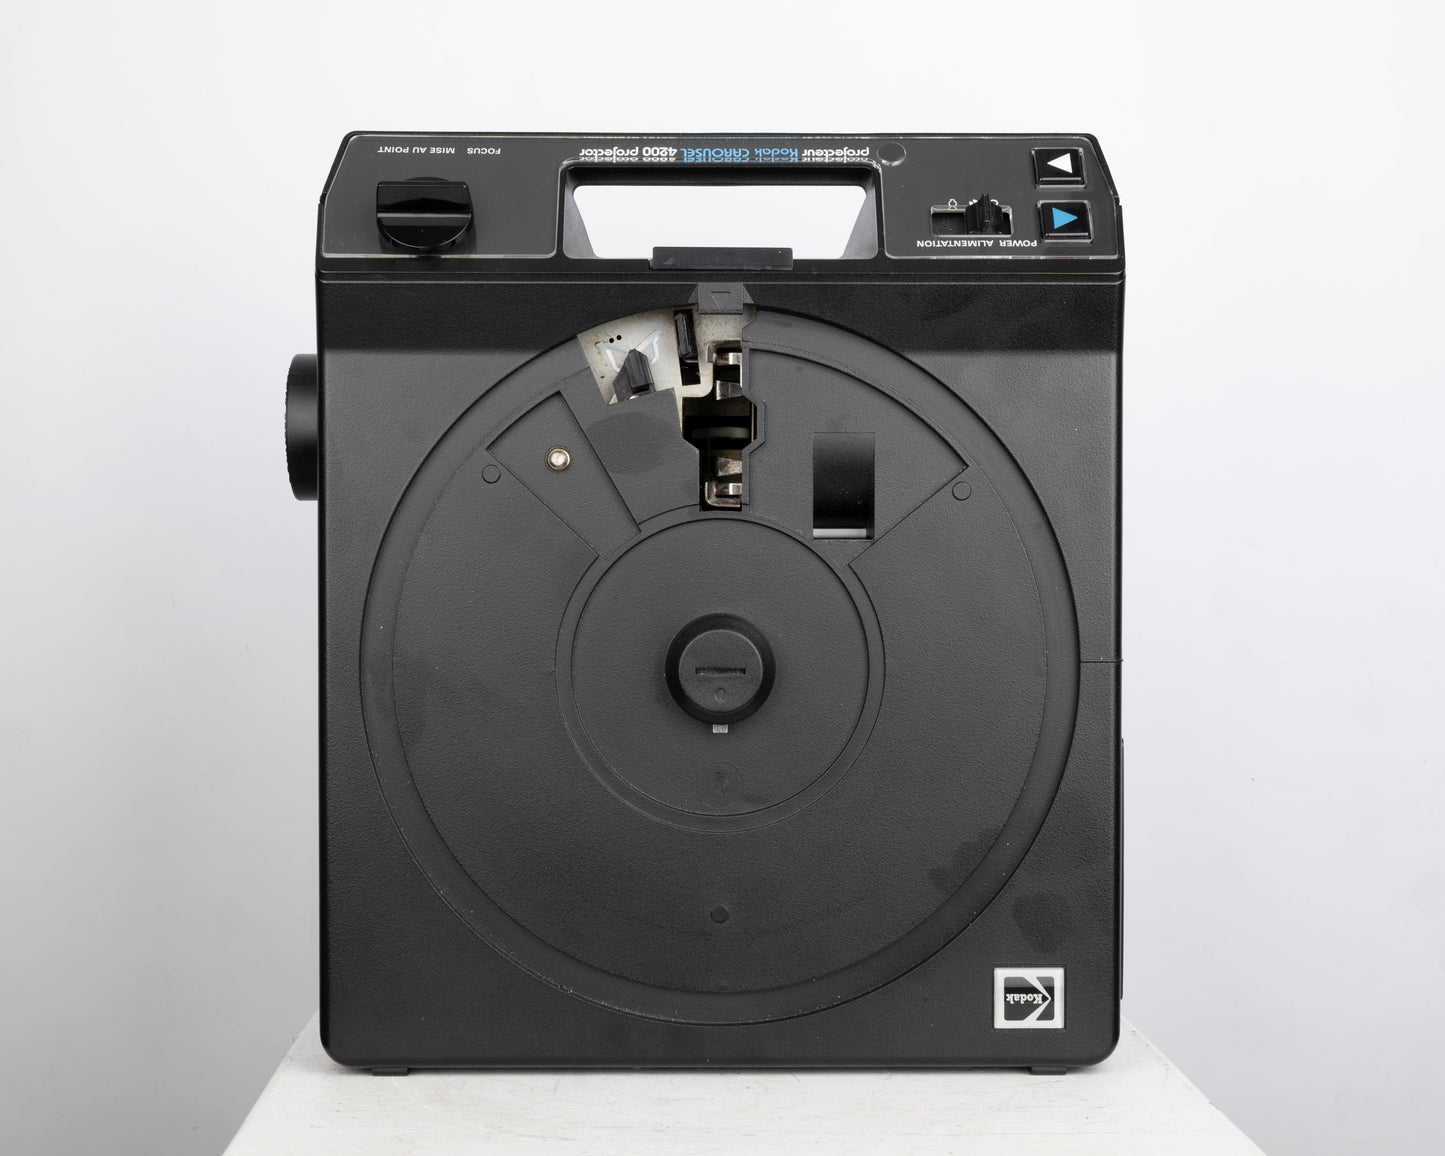 Projecteur de diapositives Kodak Carousel 4200 35 mm avec objectif Ektanar C 102 mm f2.8 (série 306895)